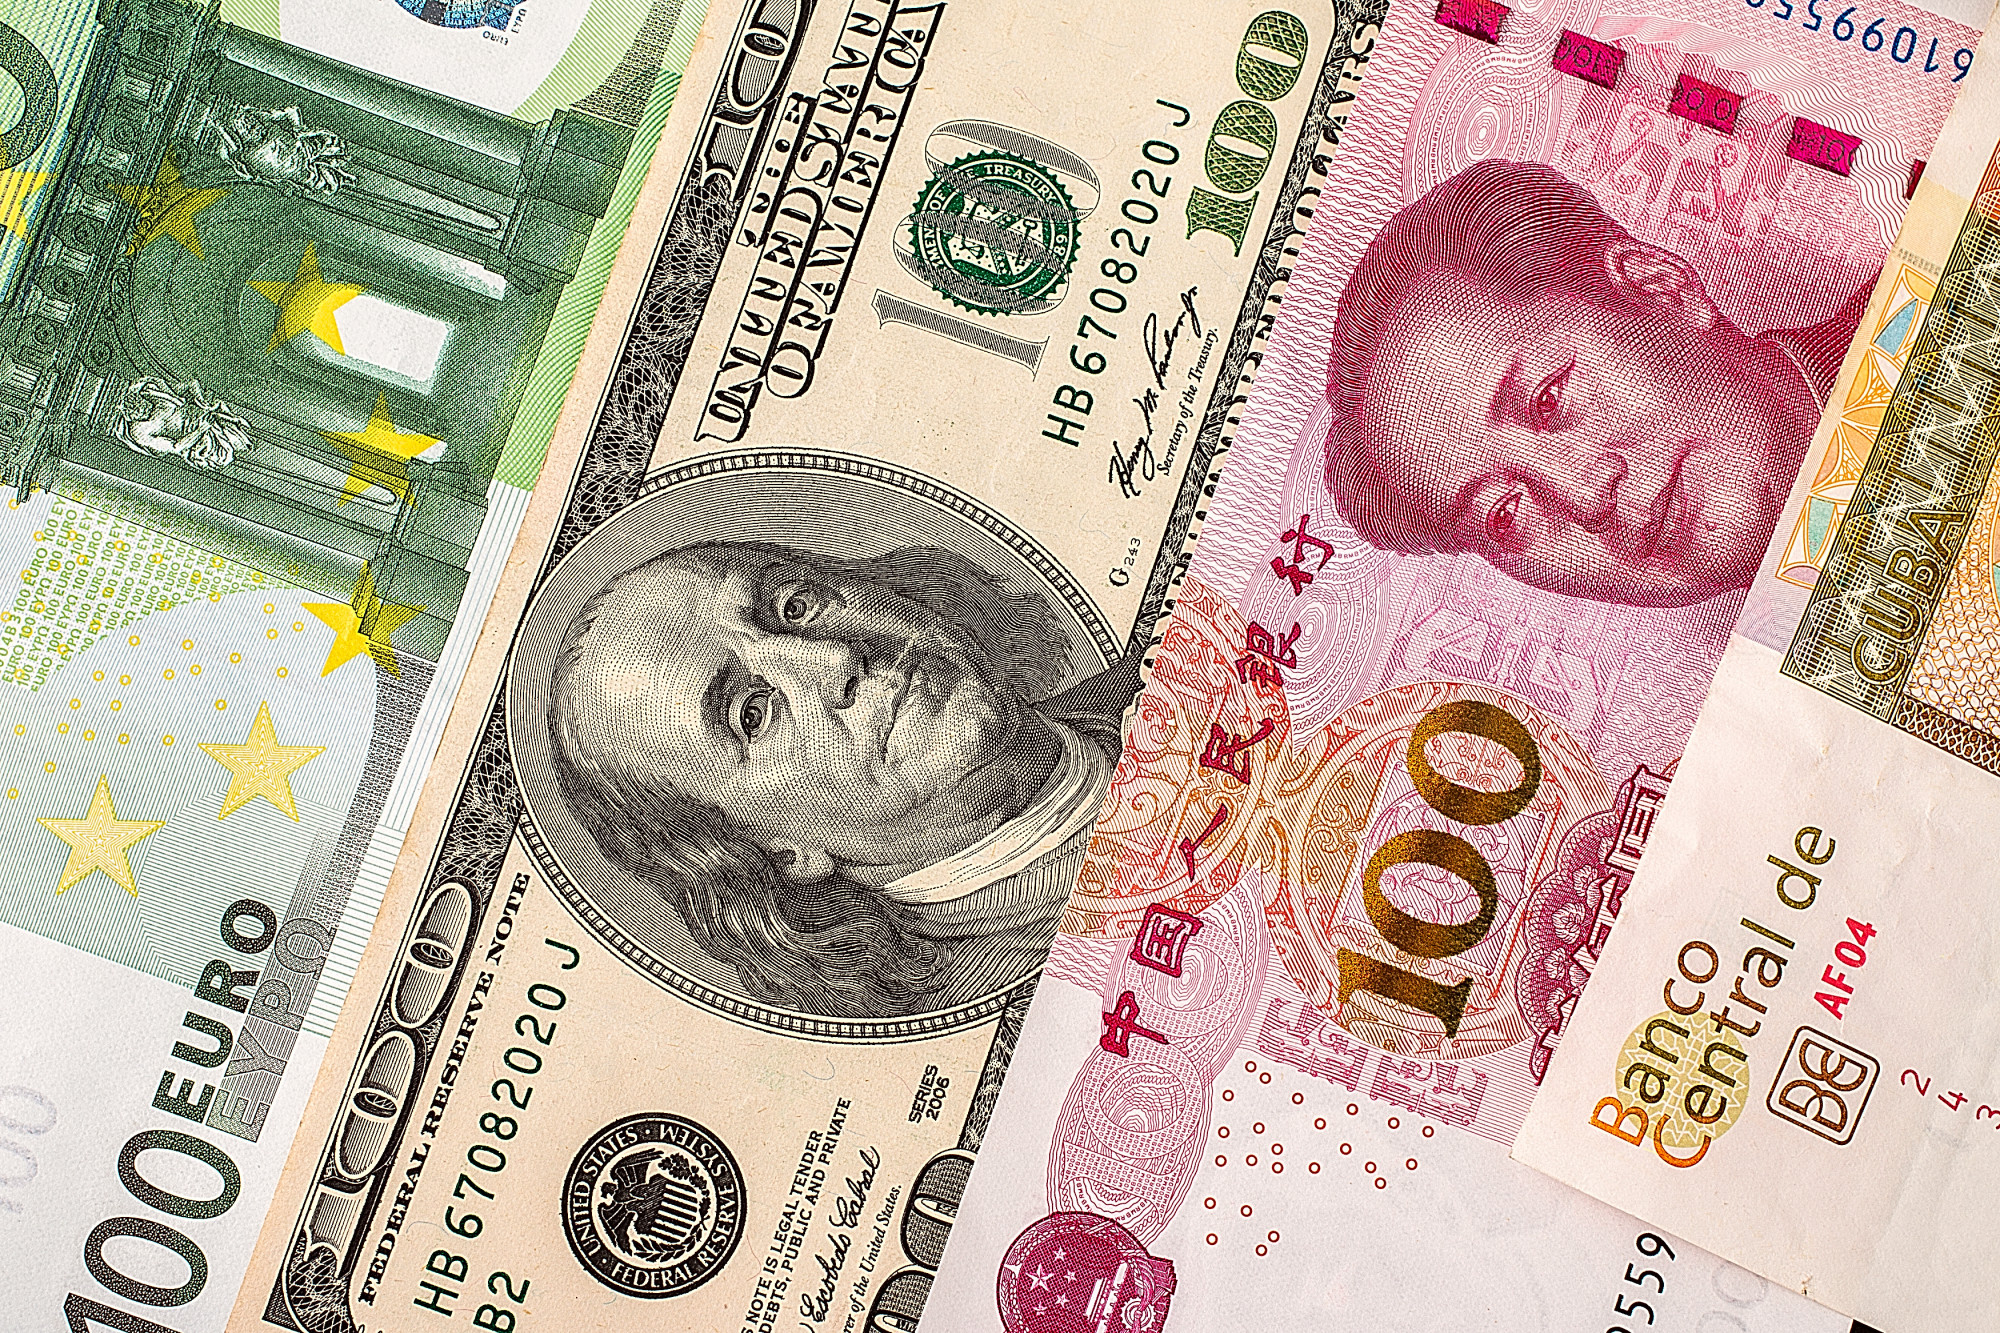 Сумма доллара и евро. Доллар евро юань. Деньги евро доллары юани. Юань к доллару. Китайский юань банкноты.